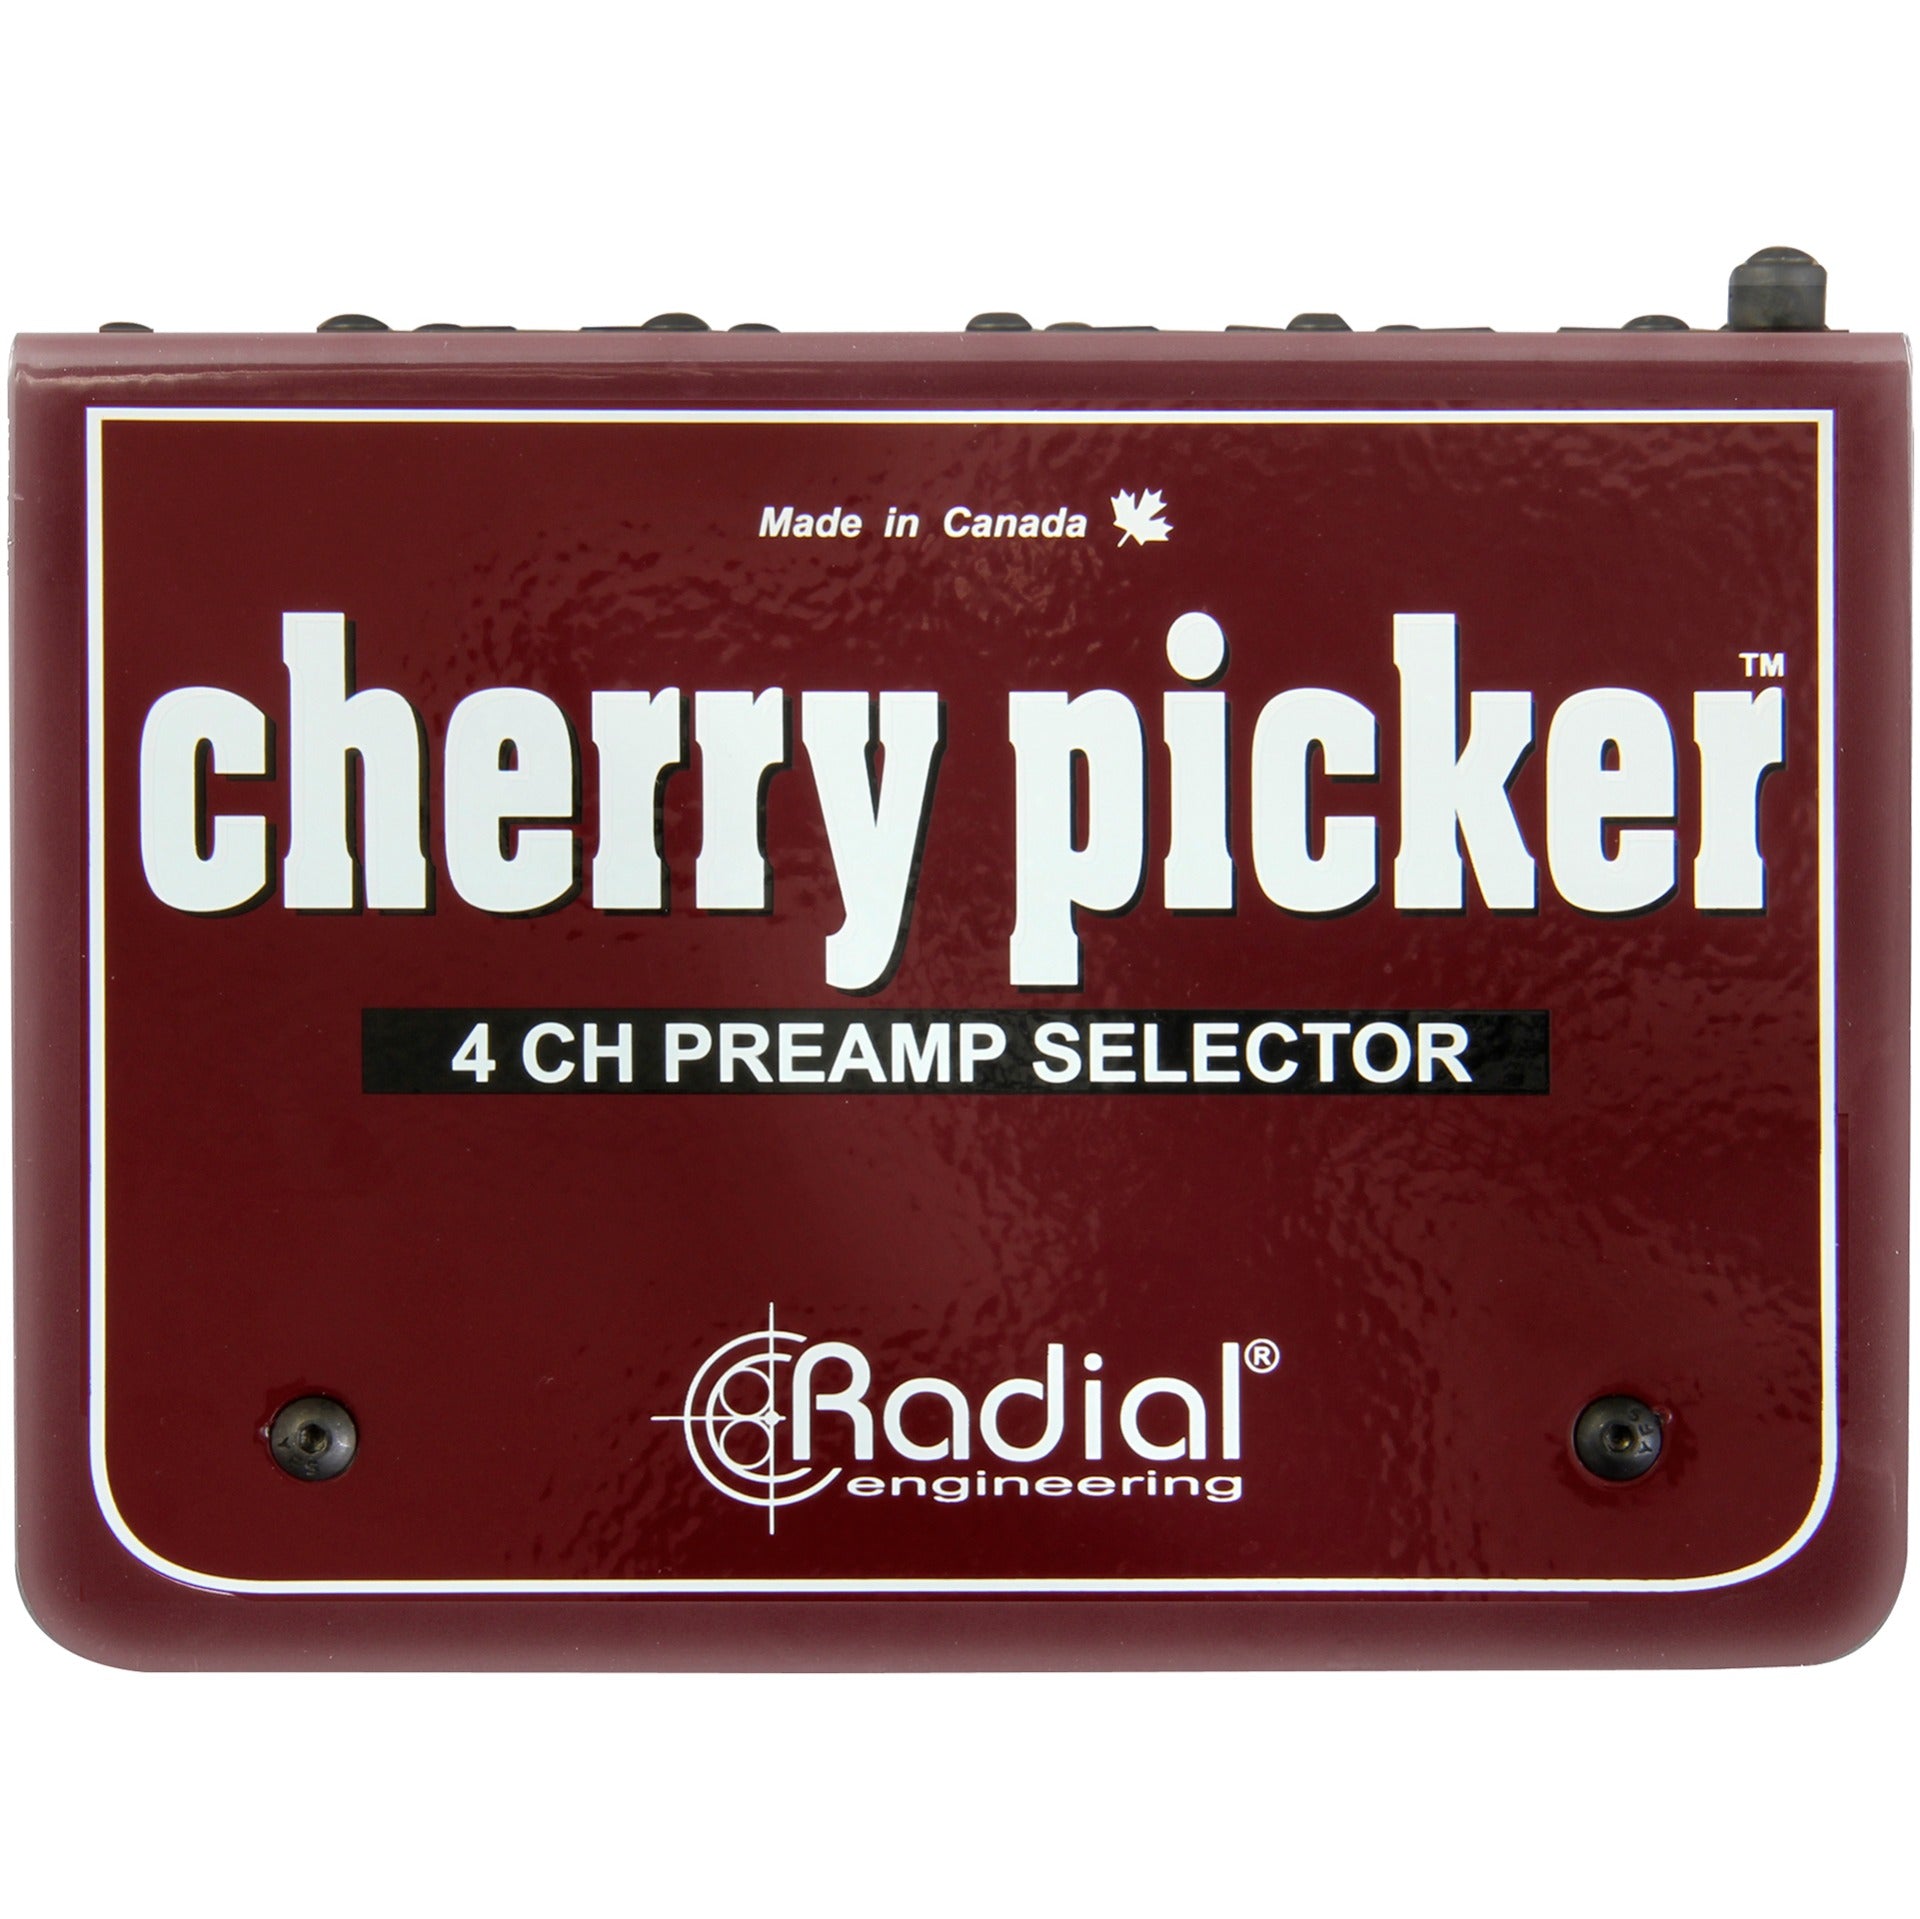 Radial Cherry Picker Passive Studio Preamp Selector 